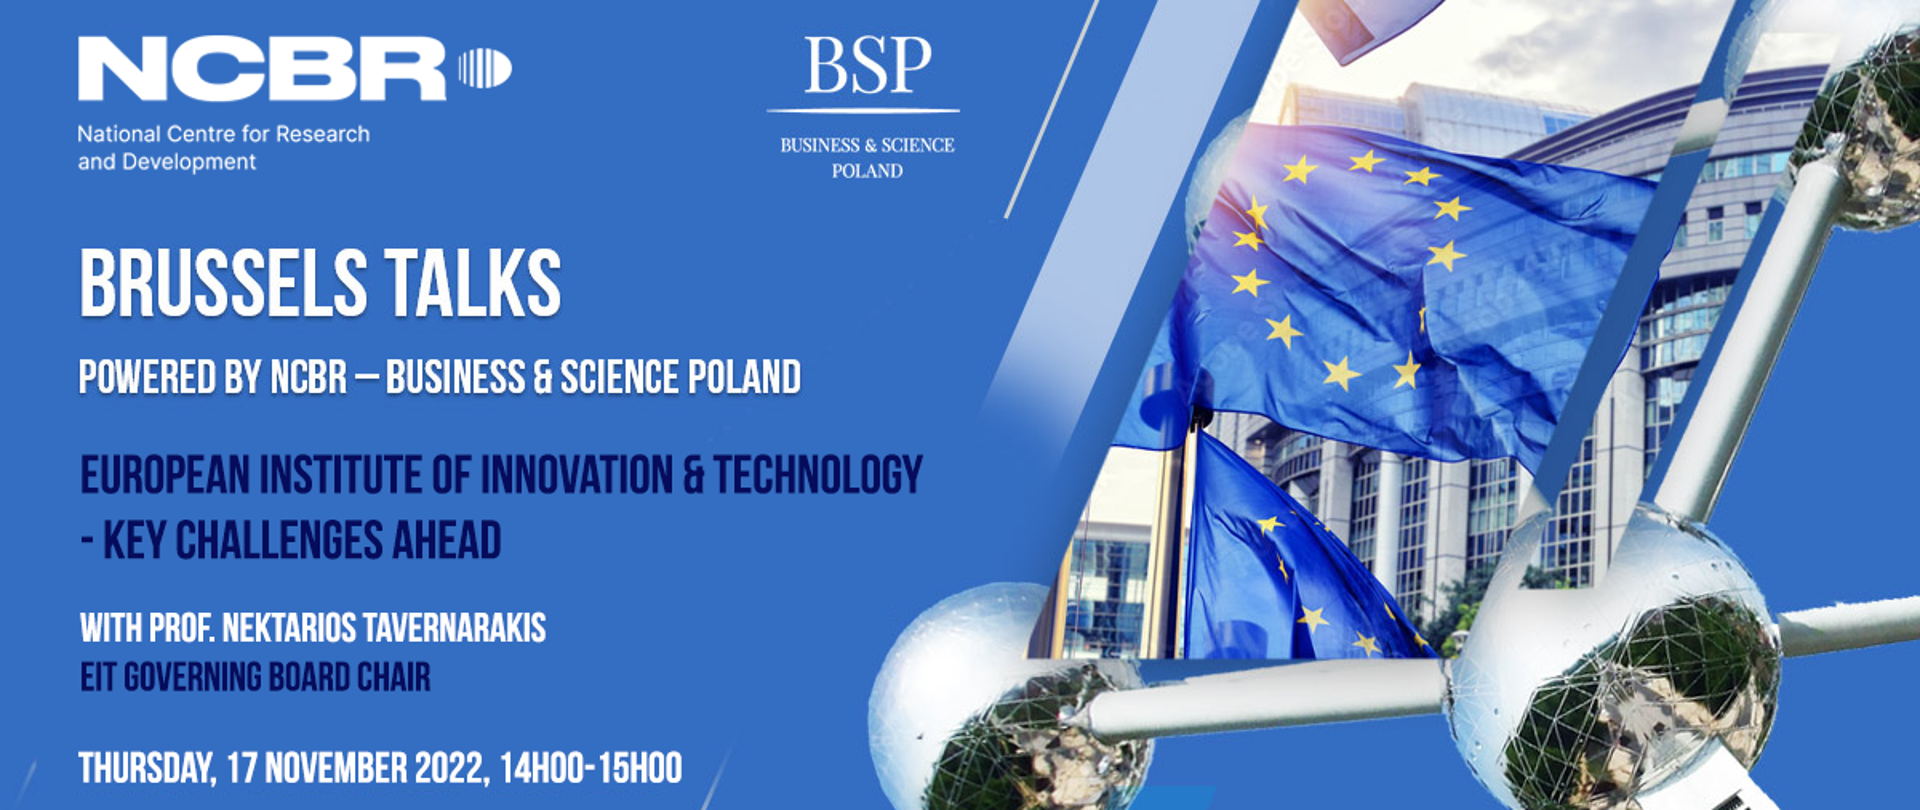 Brussels Talks: Europejski Instytut Innowacji i Technologii 